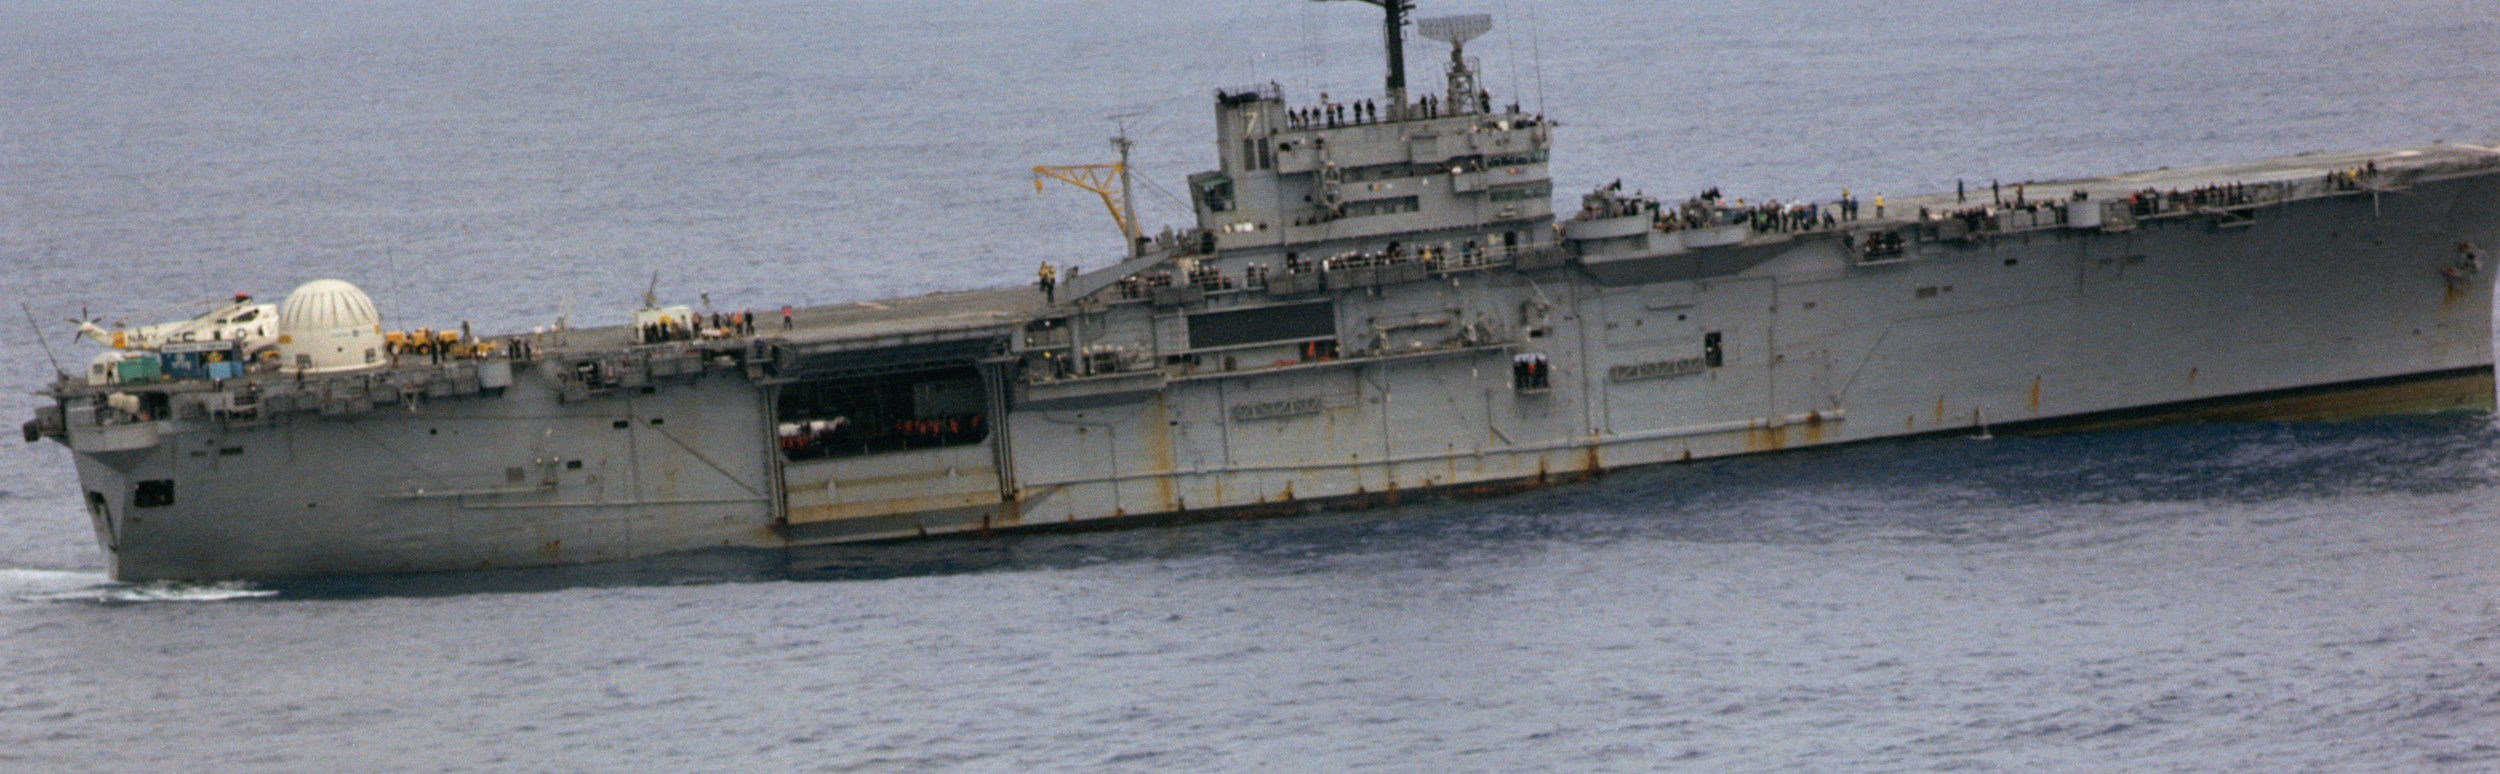 lph-7 uss guadalcanal iwo jima class amphibious assault ship landing platform helicopter us navy 85 nasa apollo-9 recovery